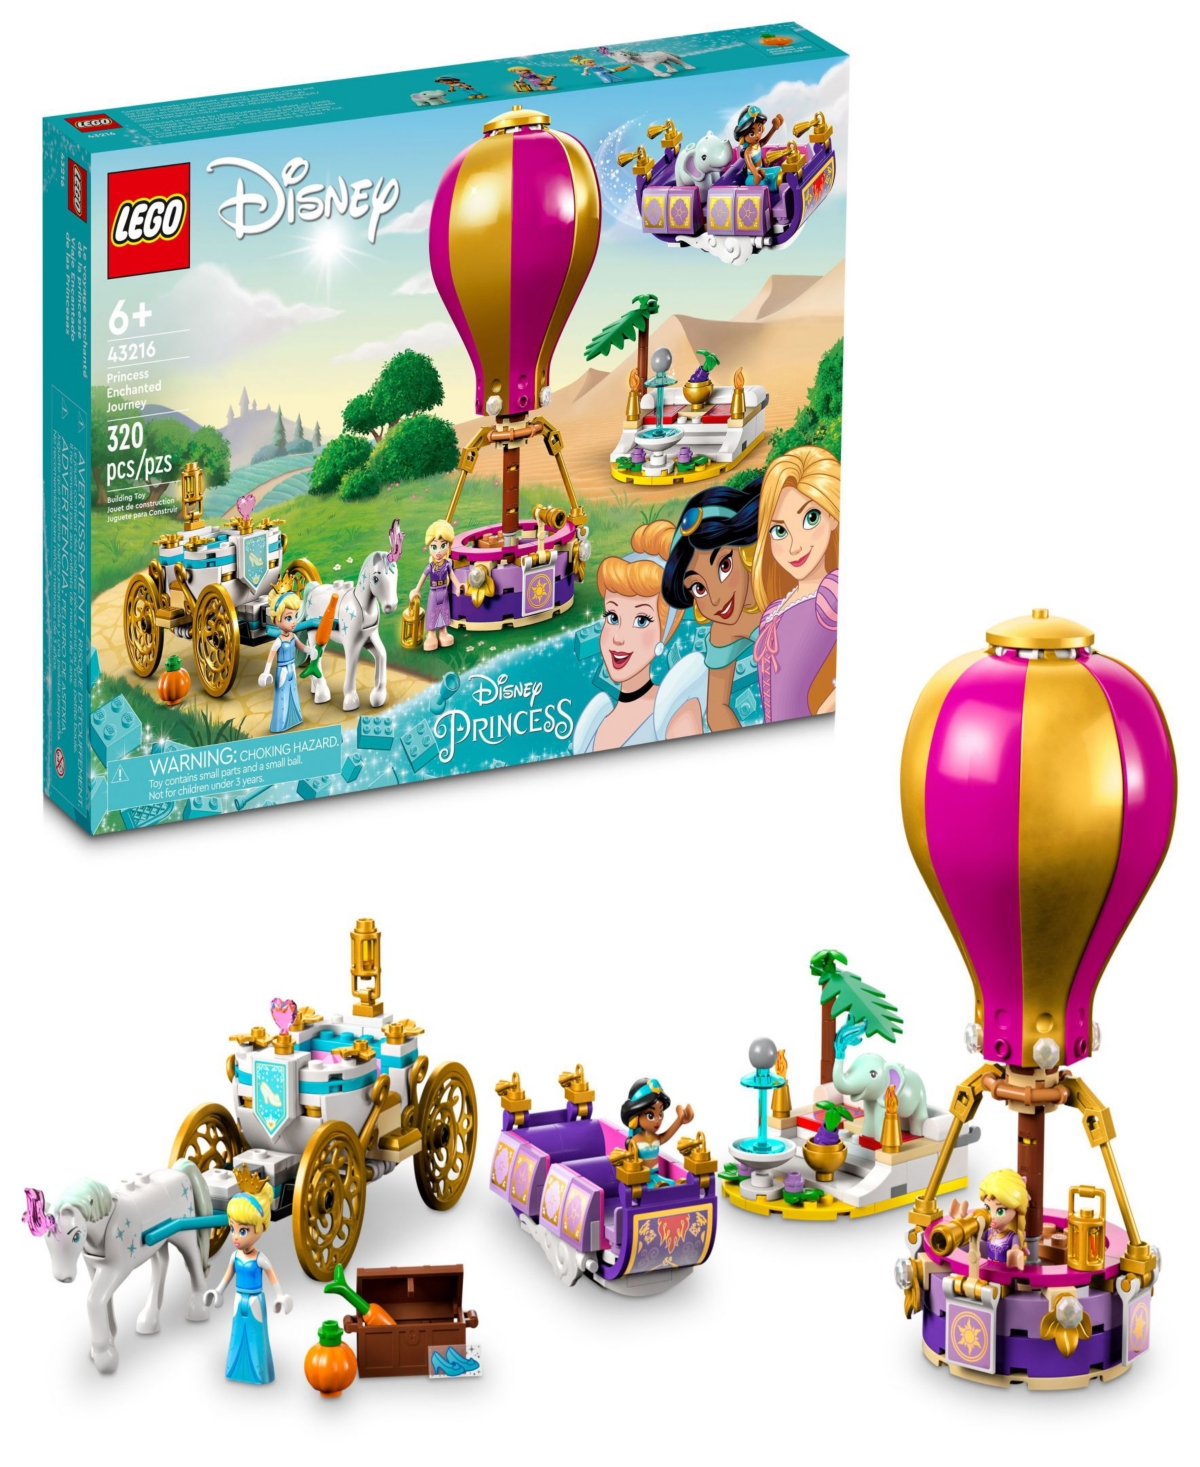 Lego Disney Princess Princess Enchanted Journey 43216 Toy Building Set With Cinderella, Jasmine And Rapun In Multicolor